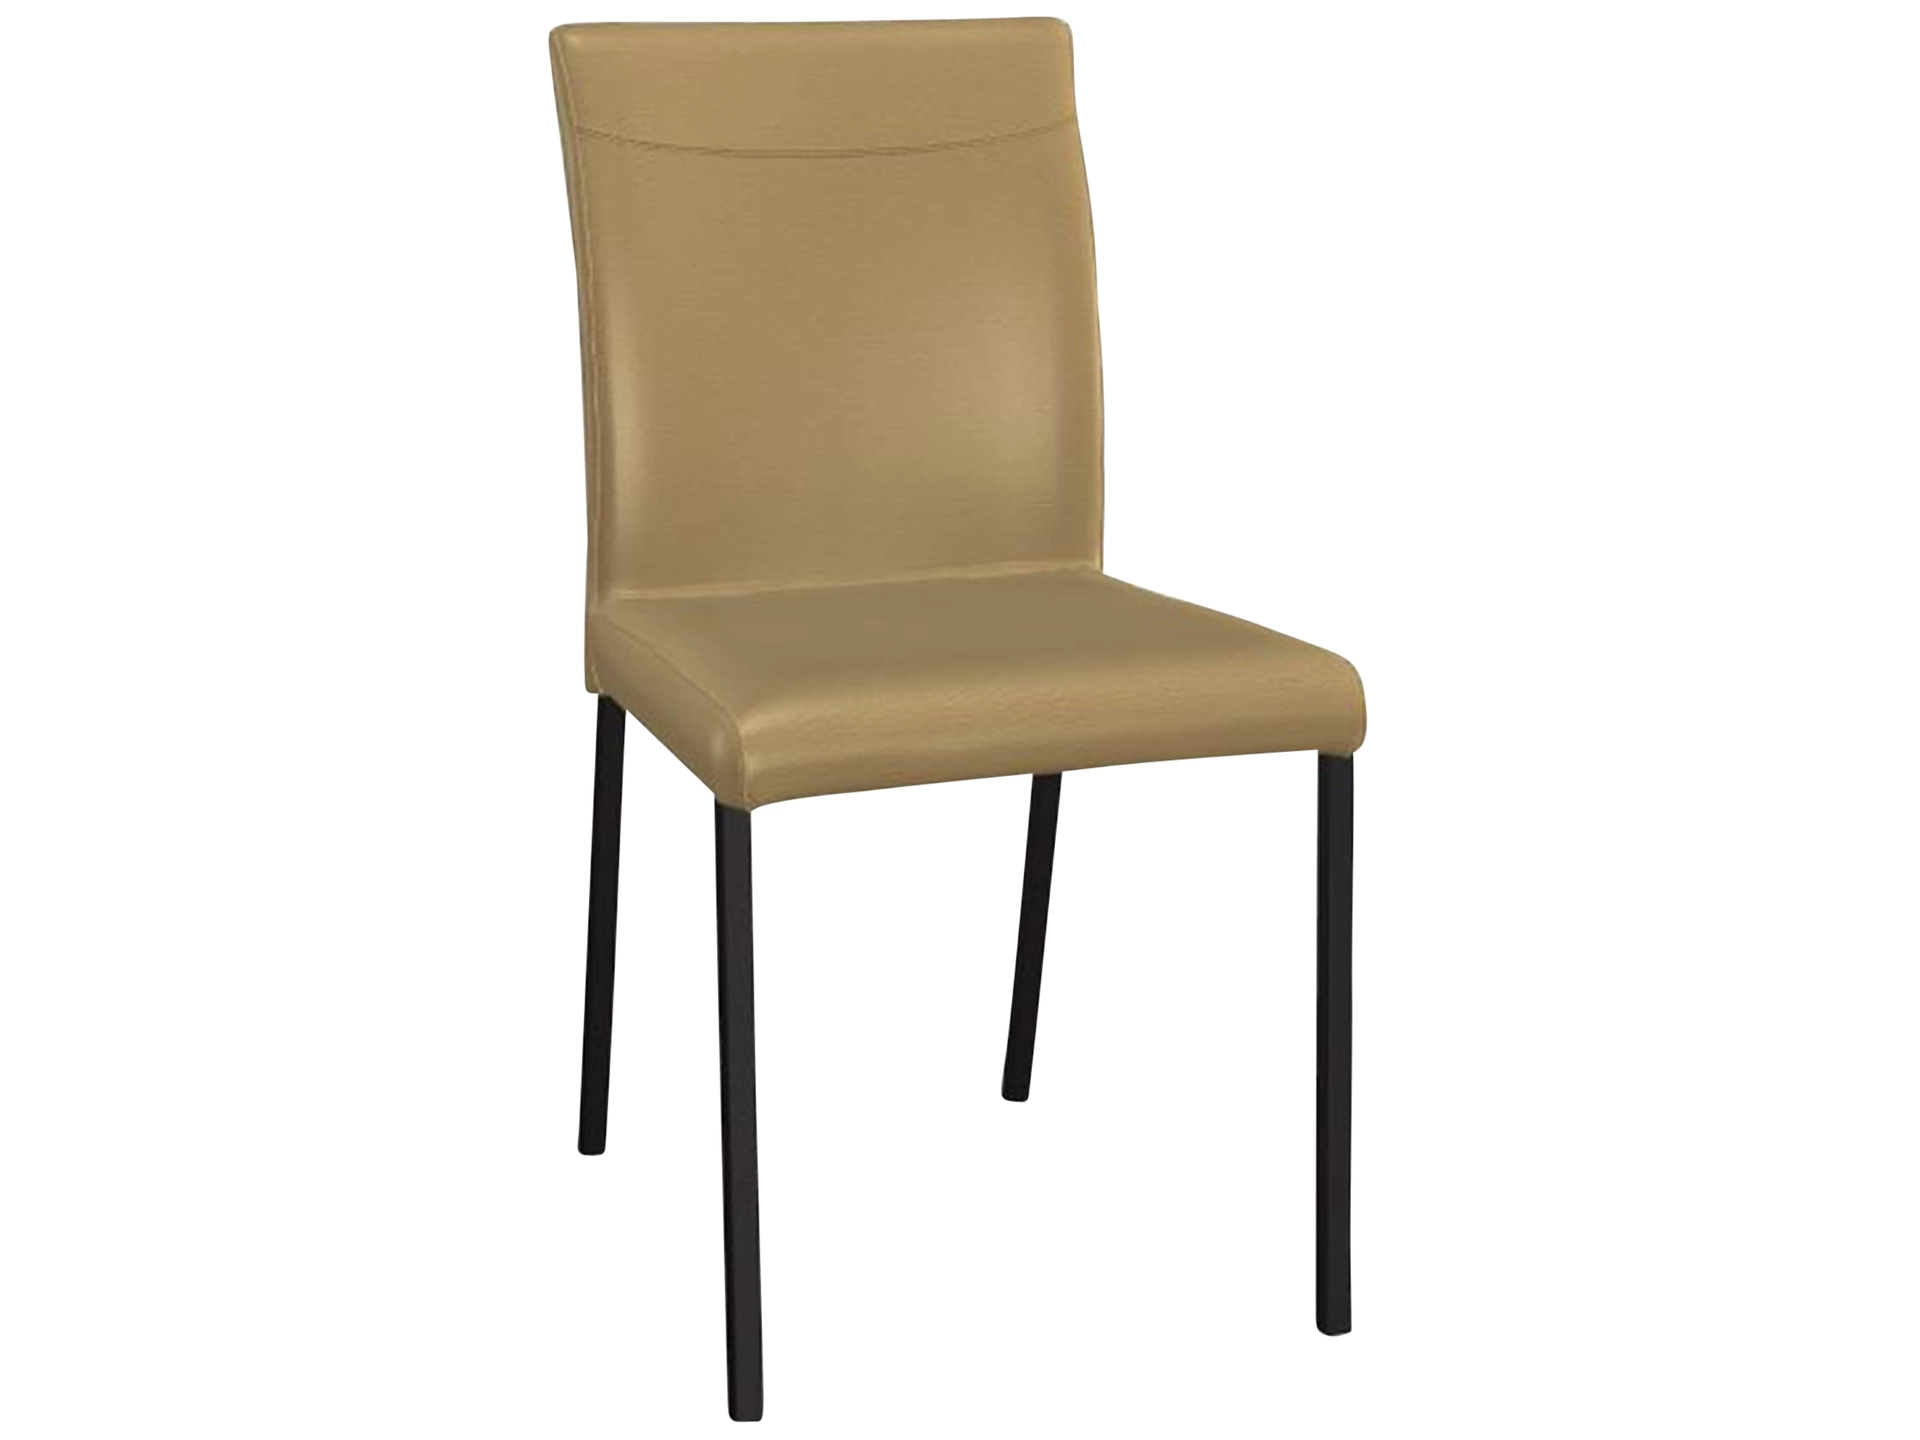 Stuhl Leicht Premium Trendstühle / Farbe: Kalahari / Material: Leder